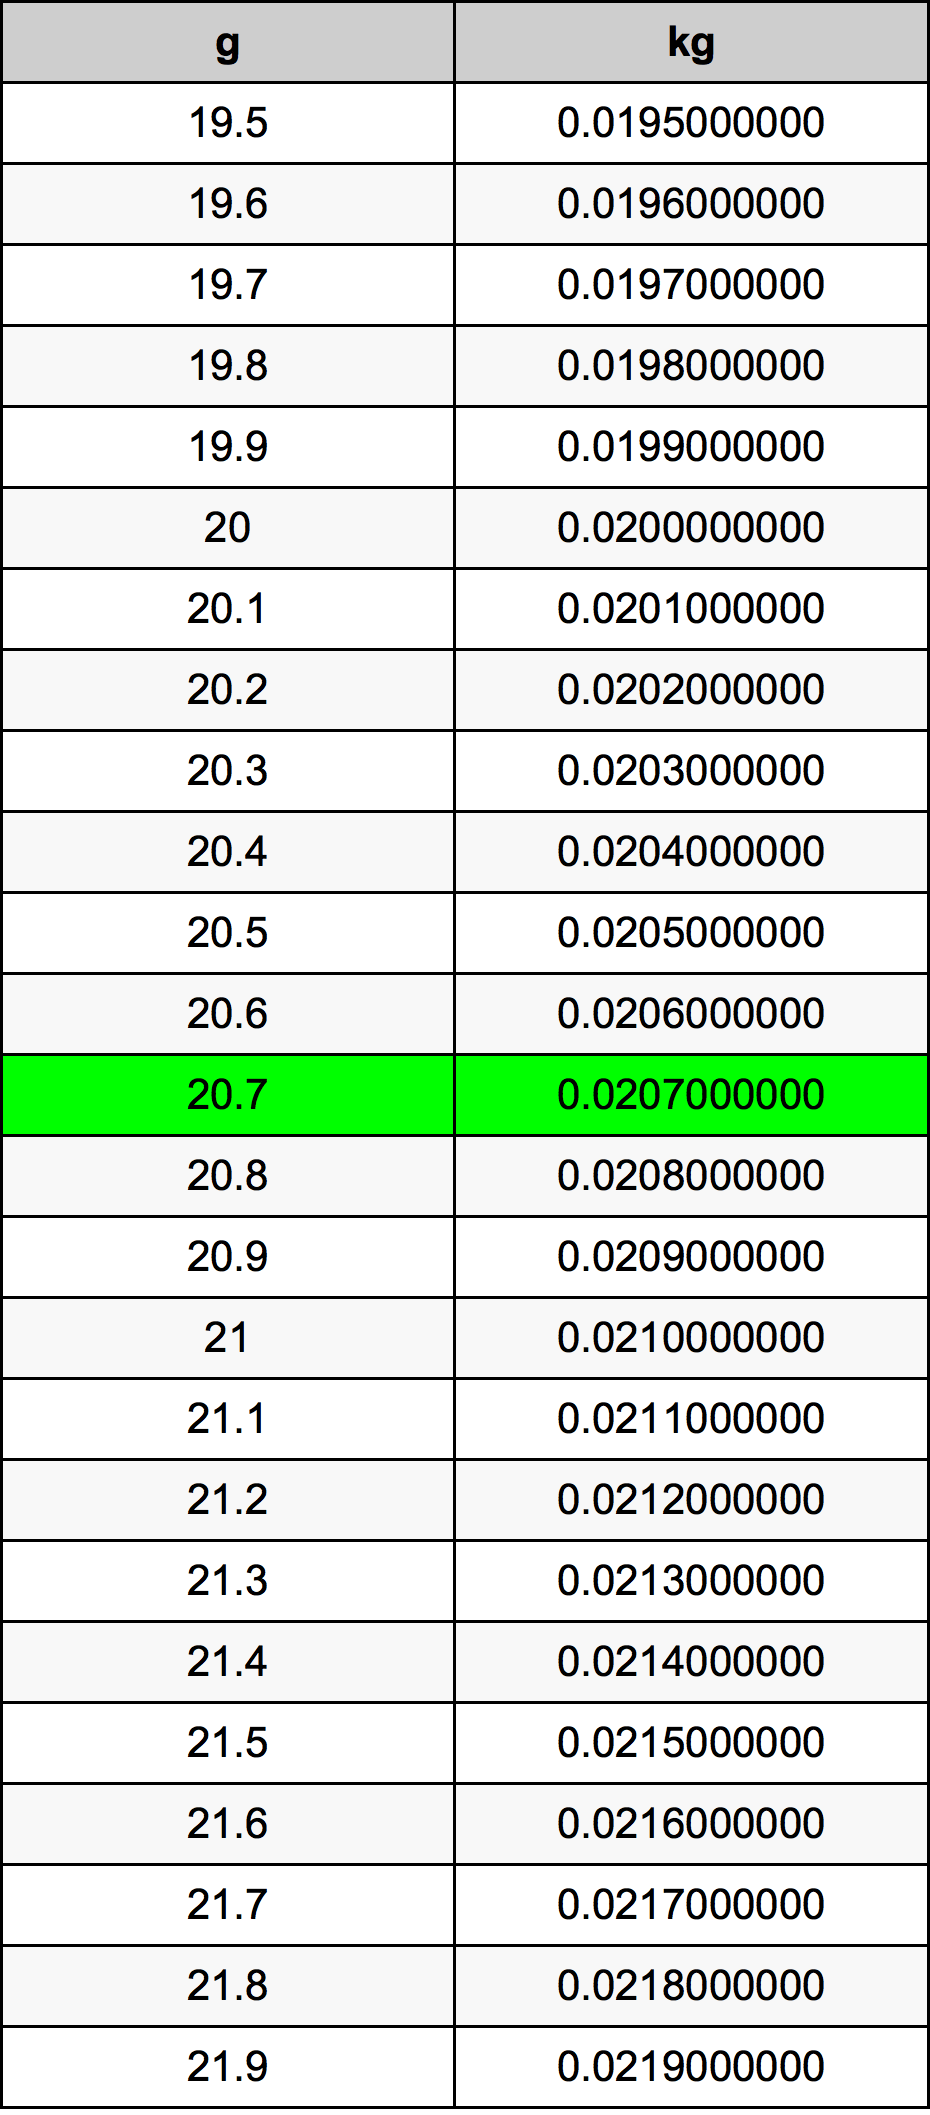 20.7 غرام جدول تحويل